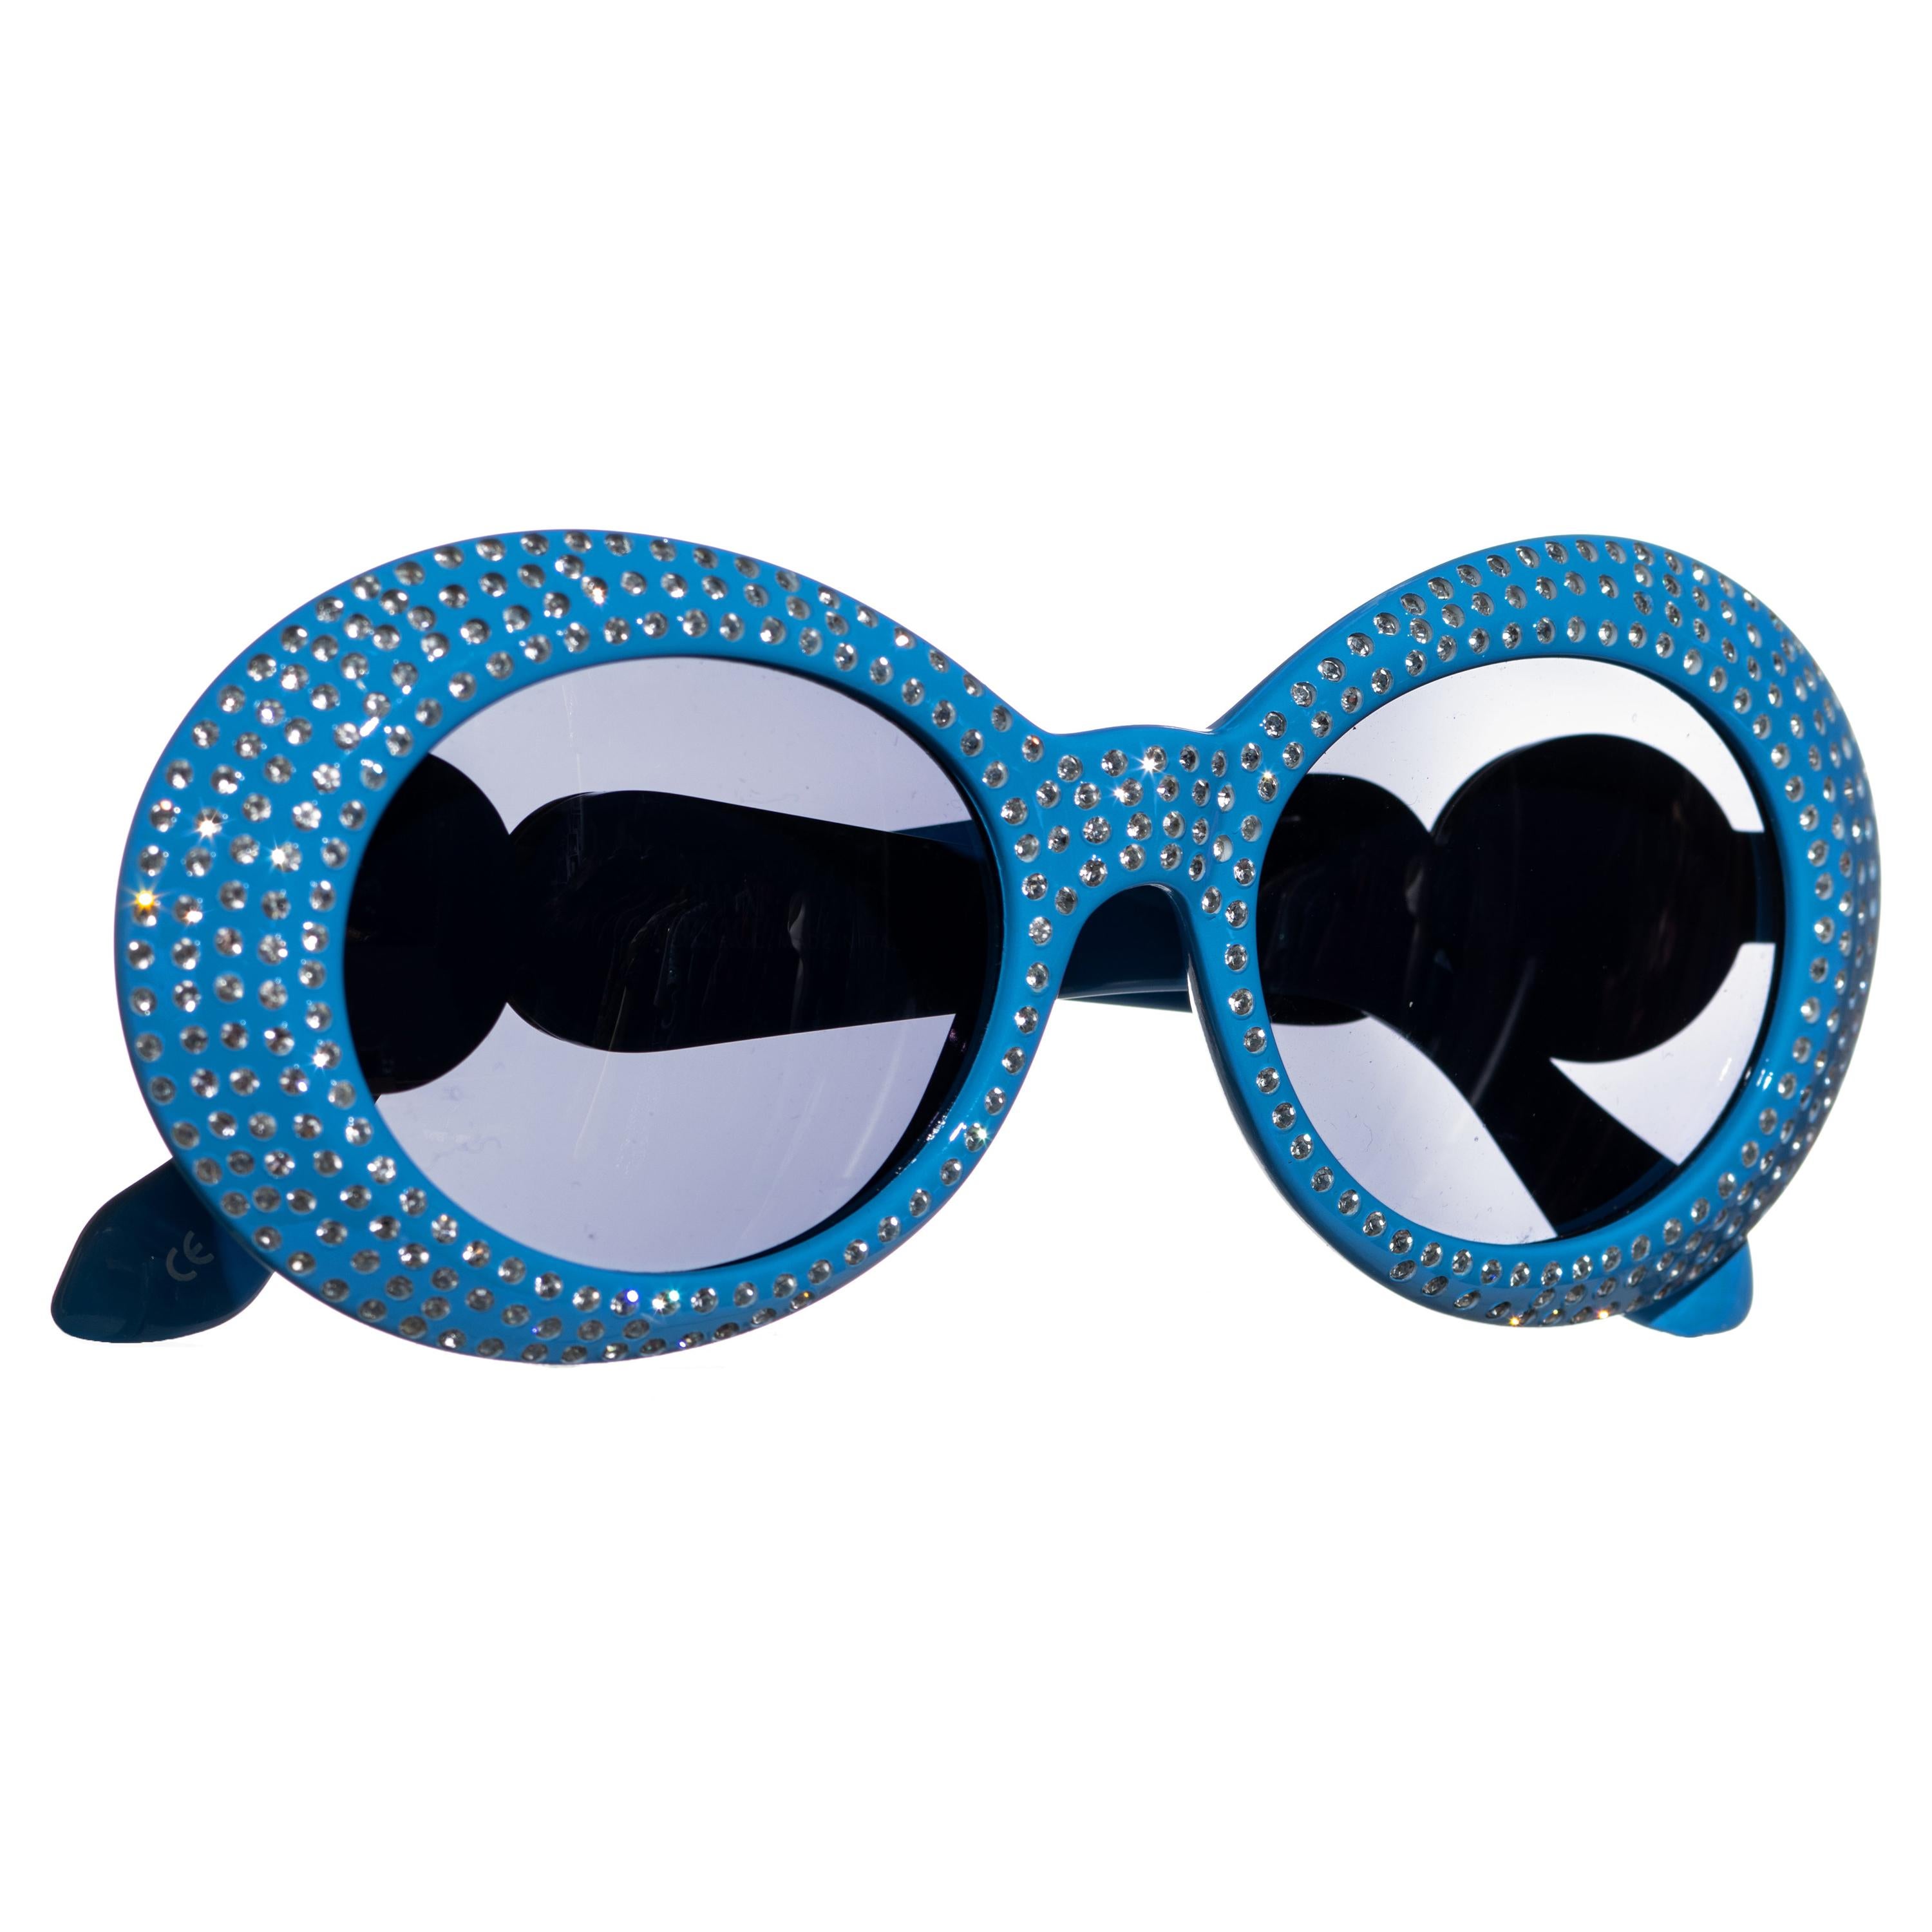 Gianni Versace unisex blue rhinestone sunglasses, fw 1996